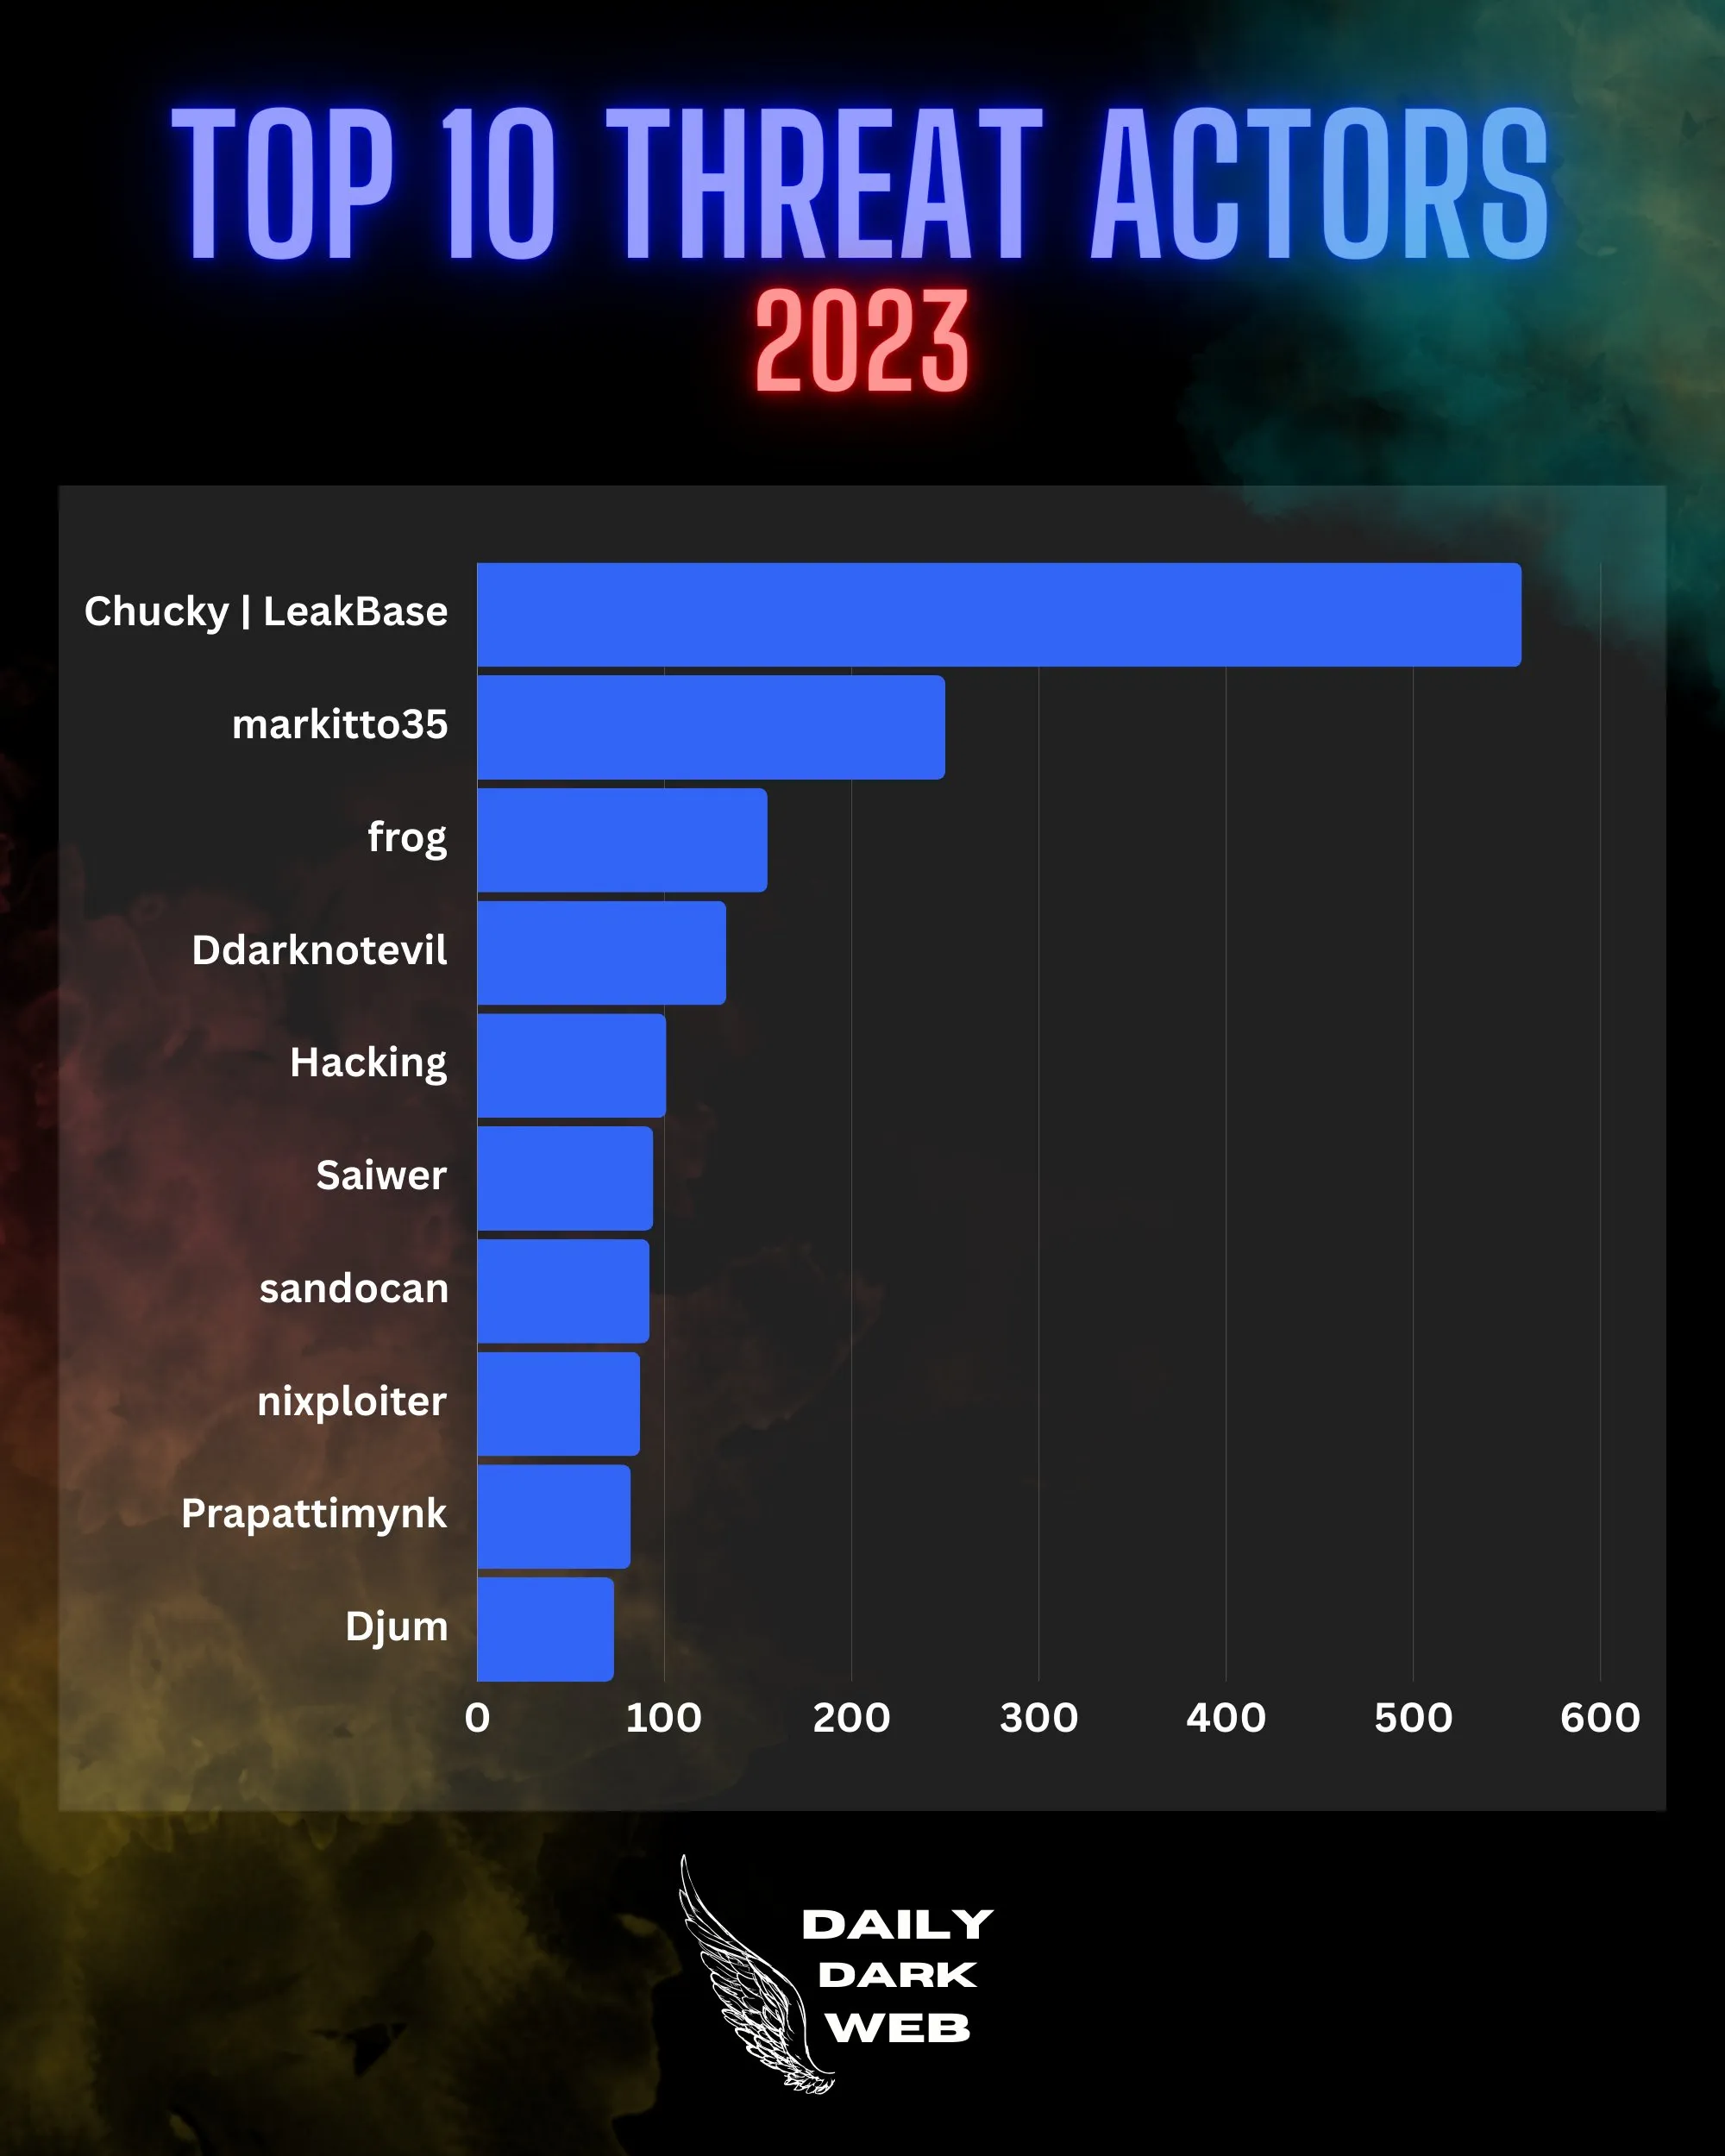 Top 10 Threat Actors in 2023 (Source: Daily Dark Web)